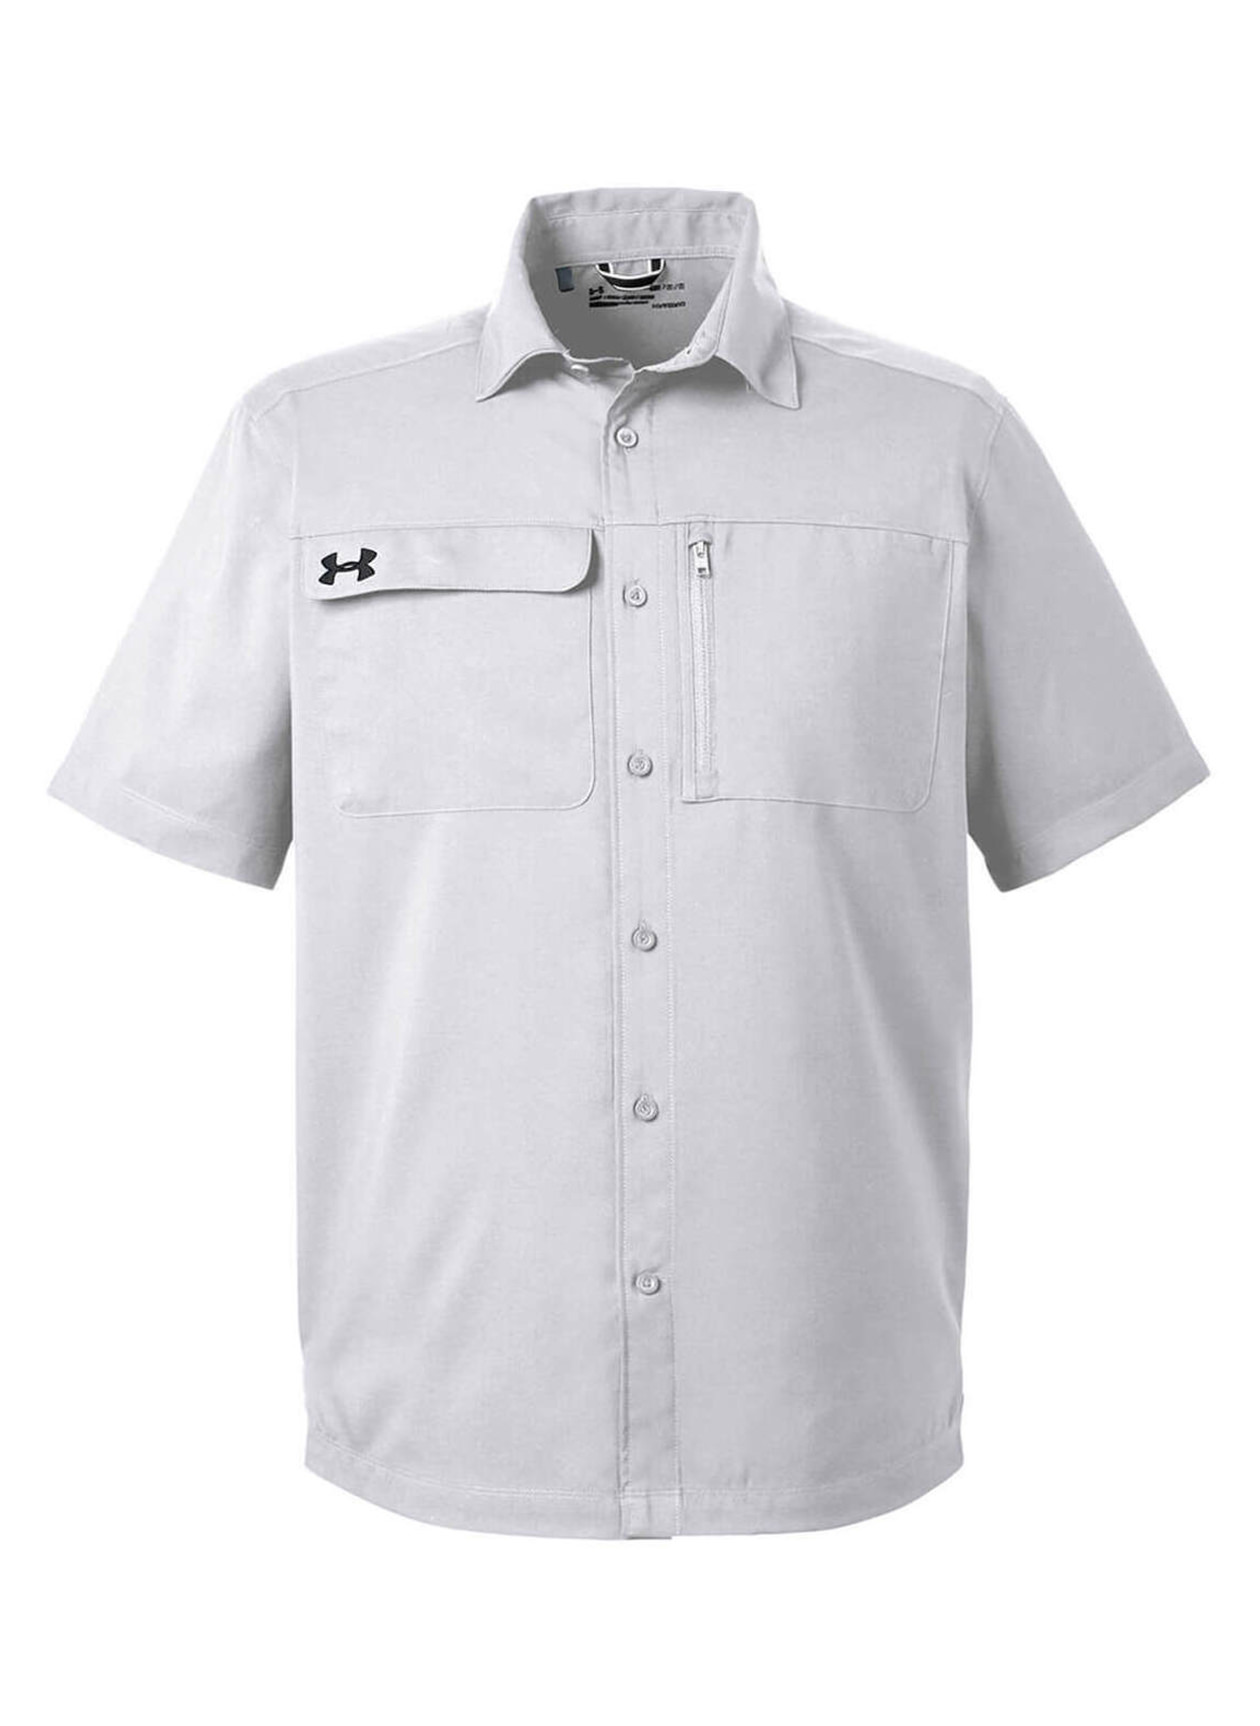 Carhartt Men's Navy Rugged Professional Series Short-Sleeve Shirt